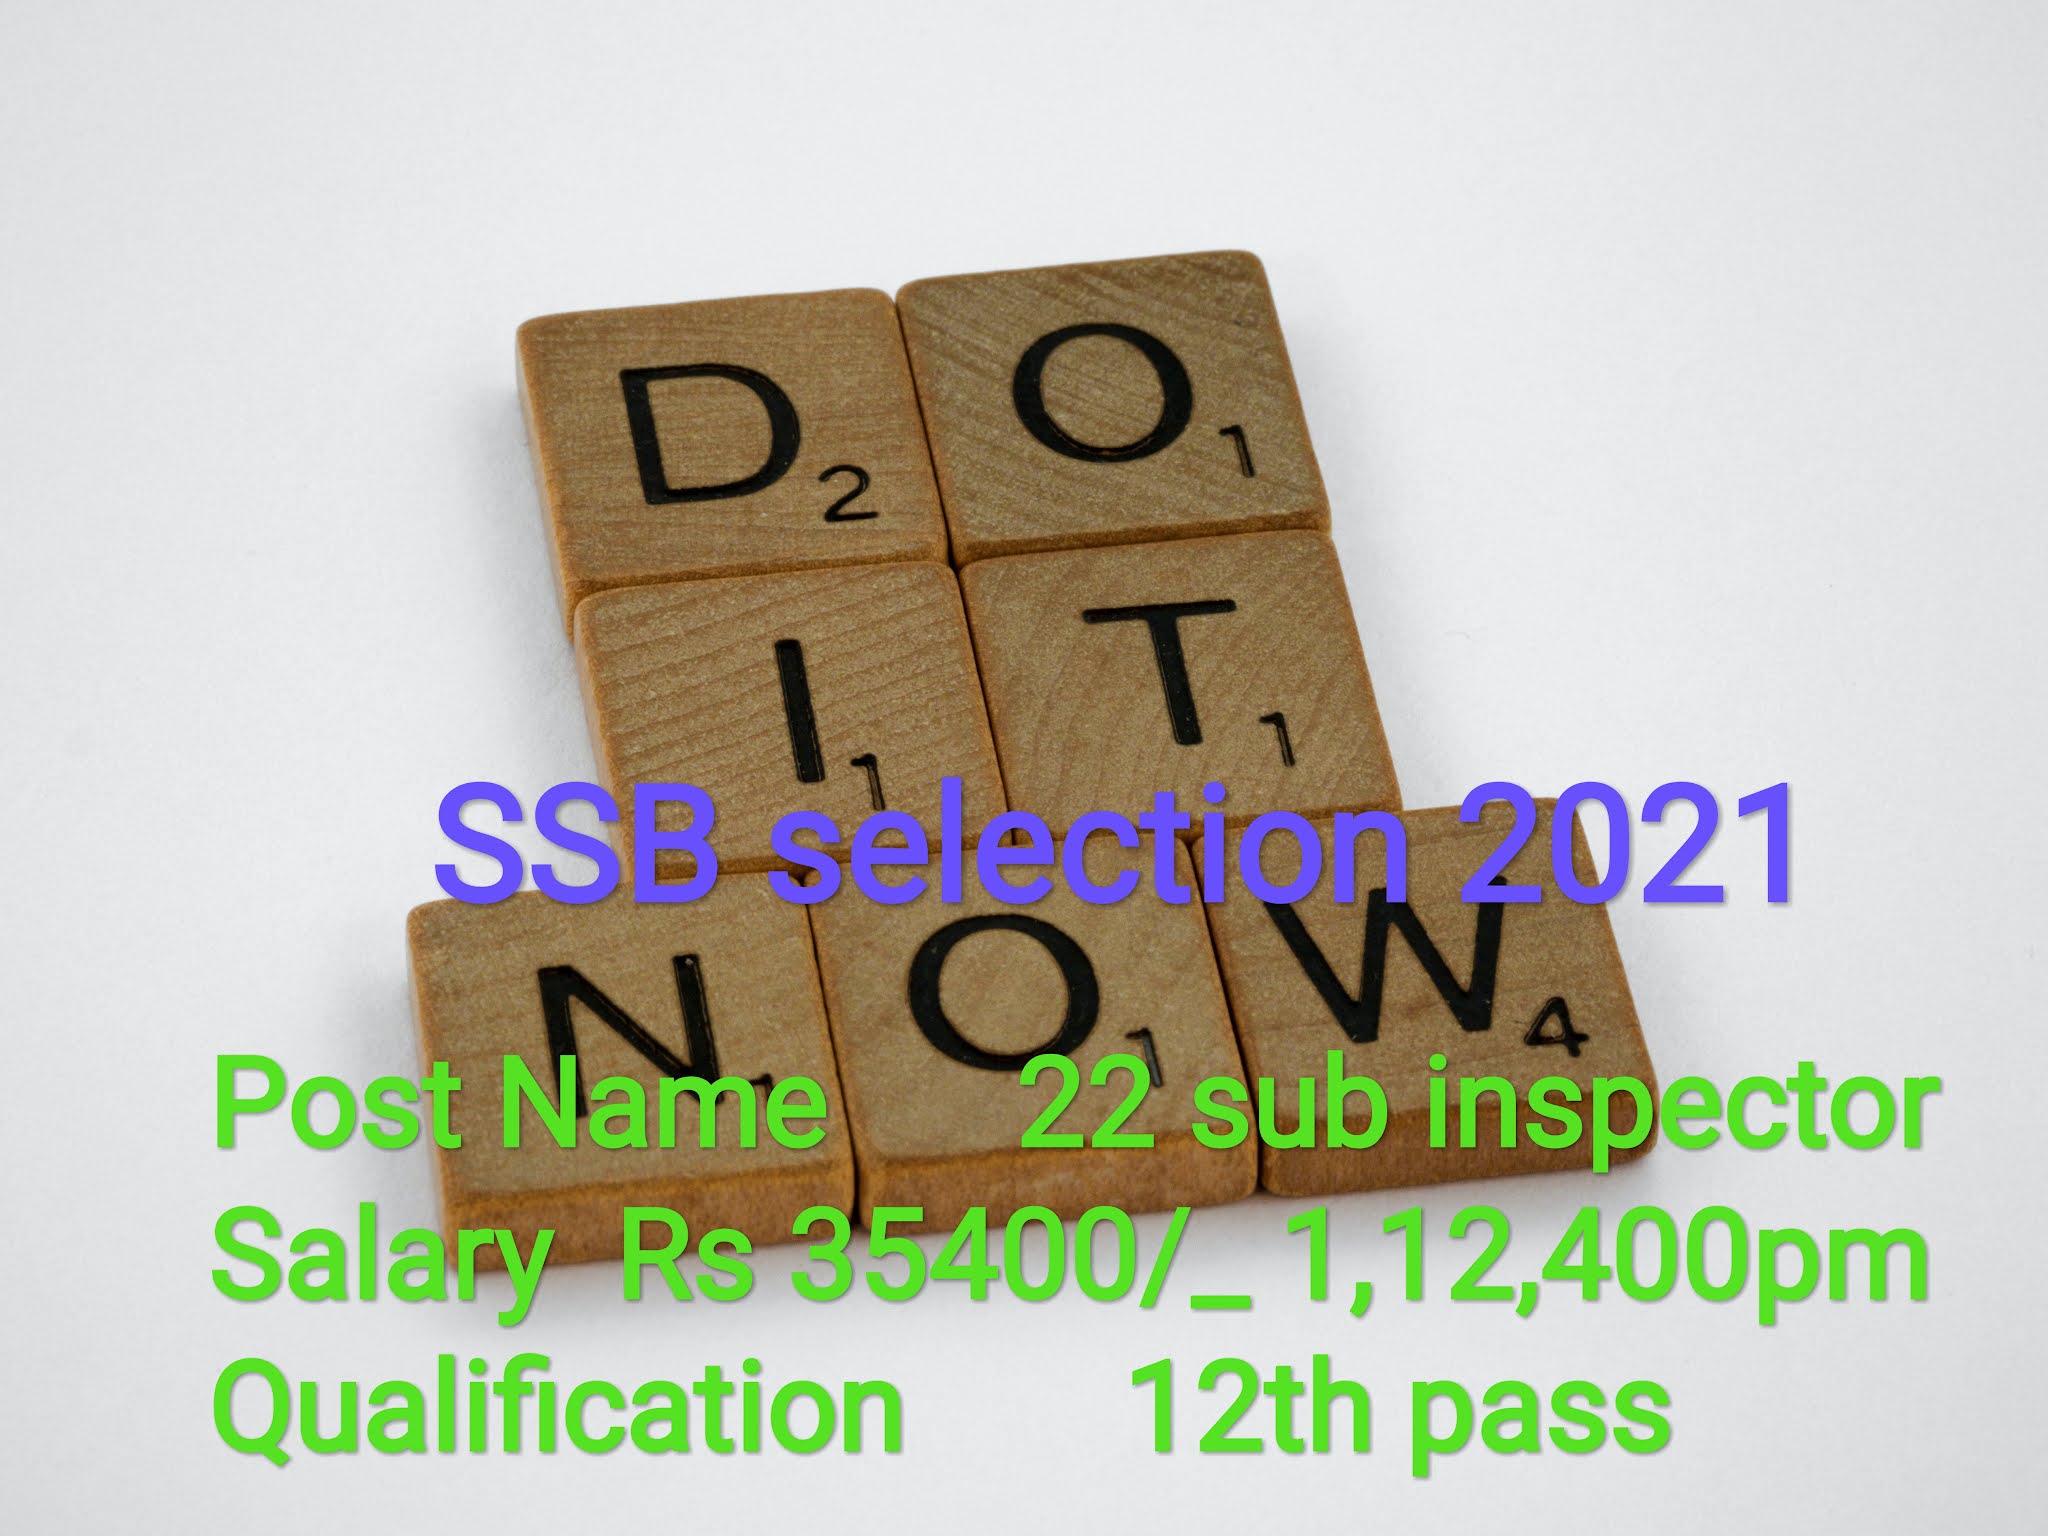 Job Vacancy Alart SSB selection 2021